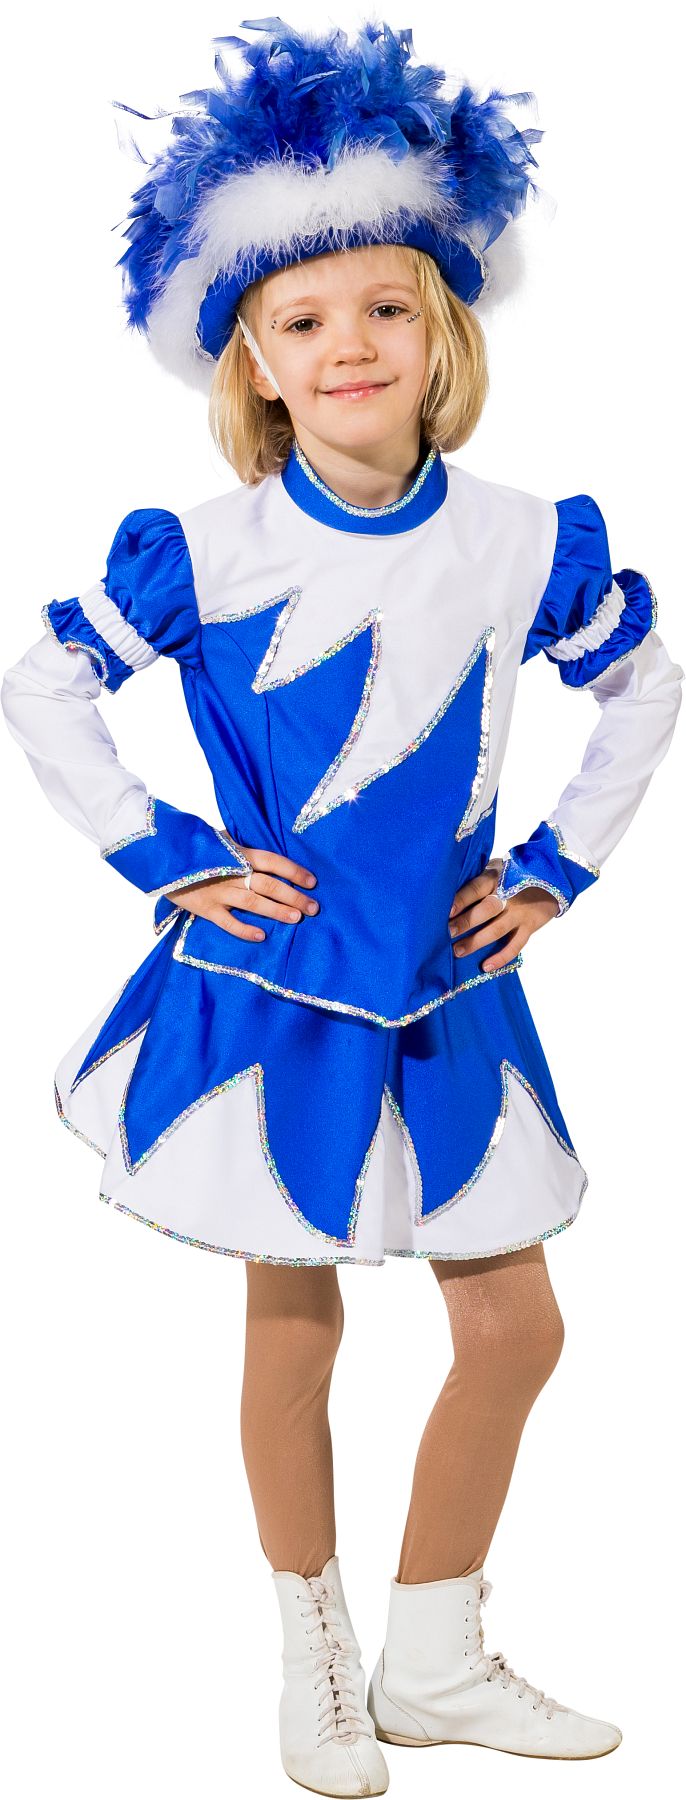 Costume d'étincelle bleu-blanc